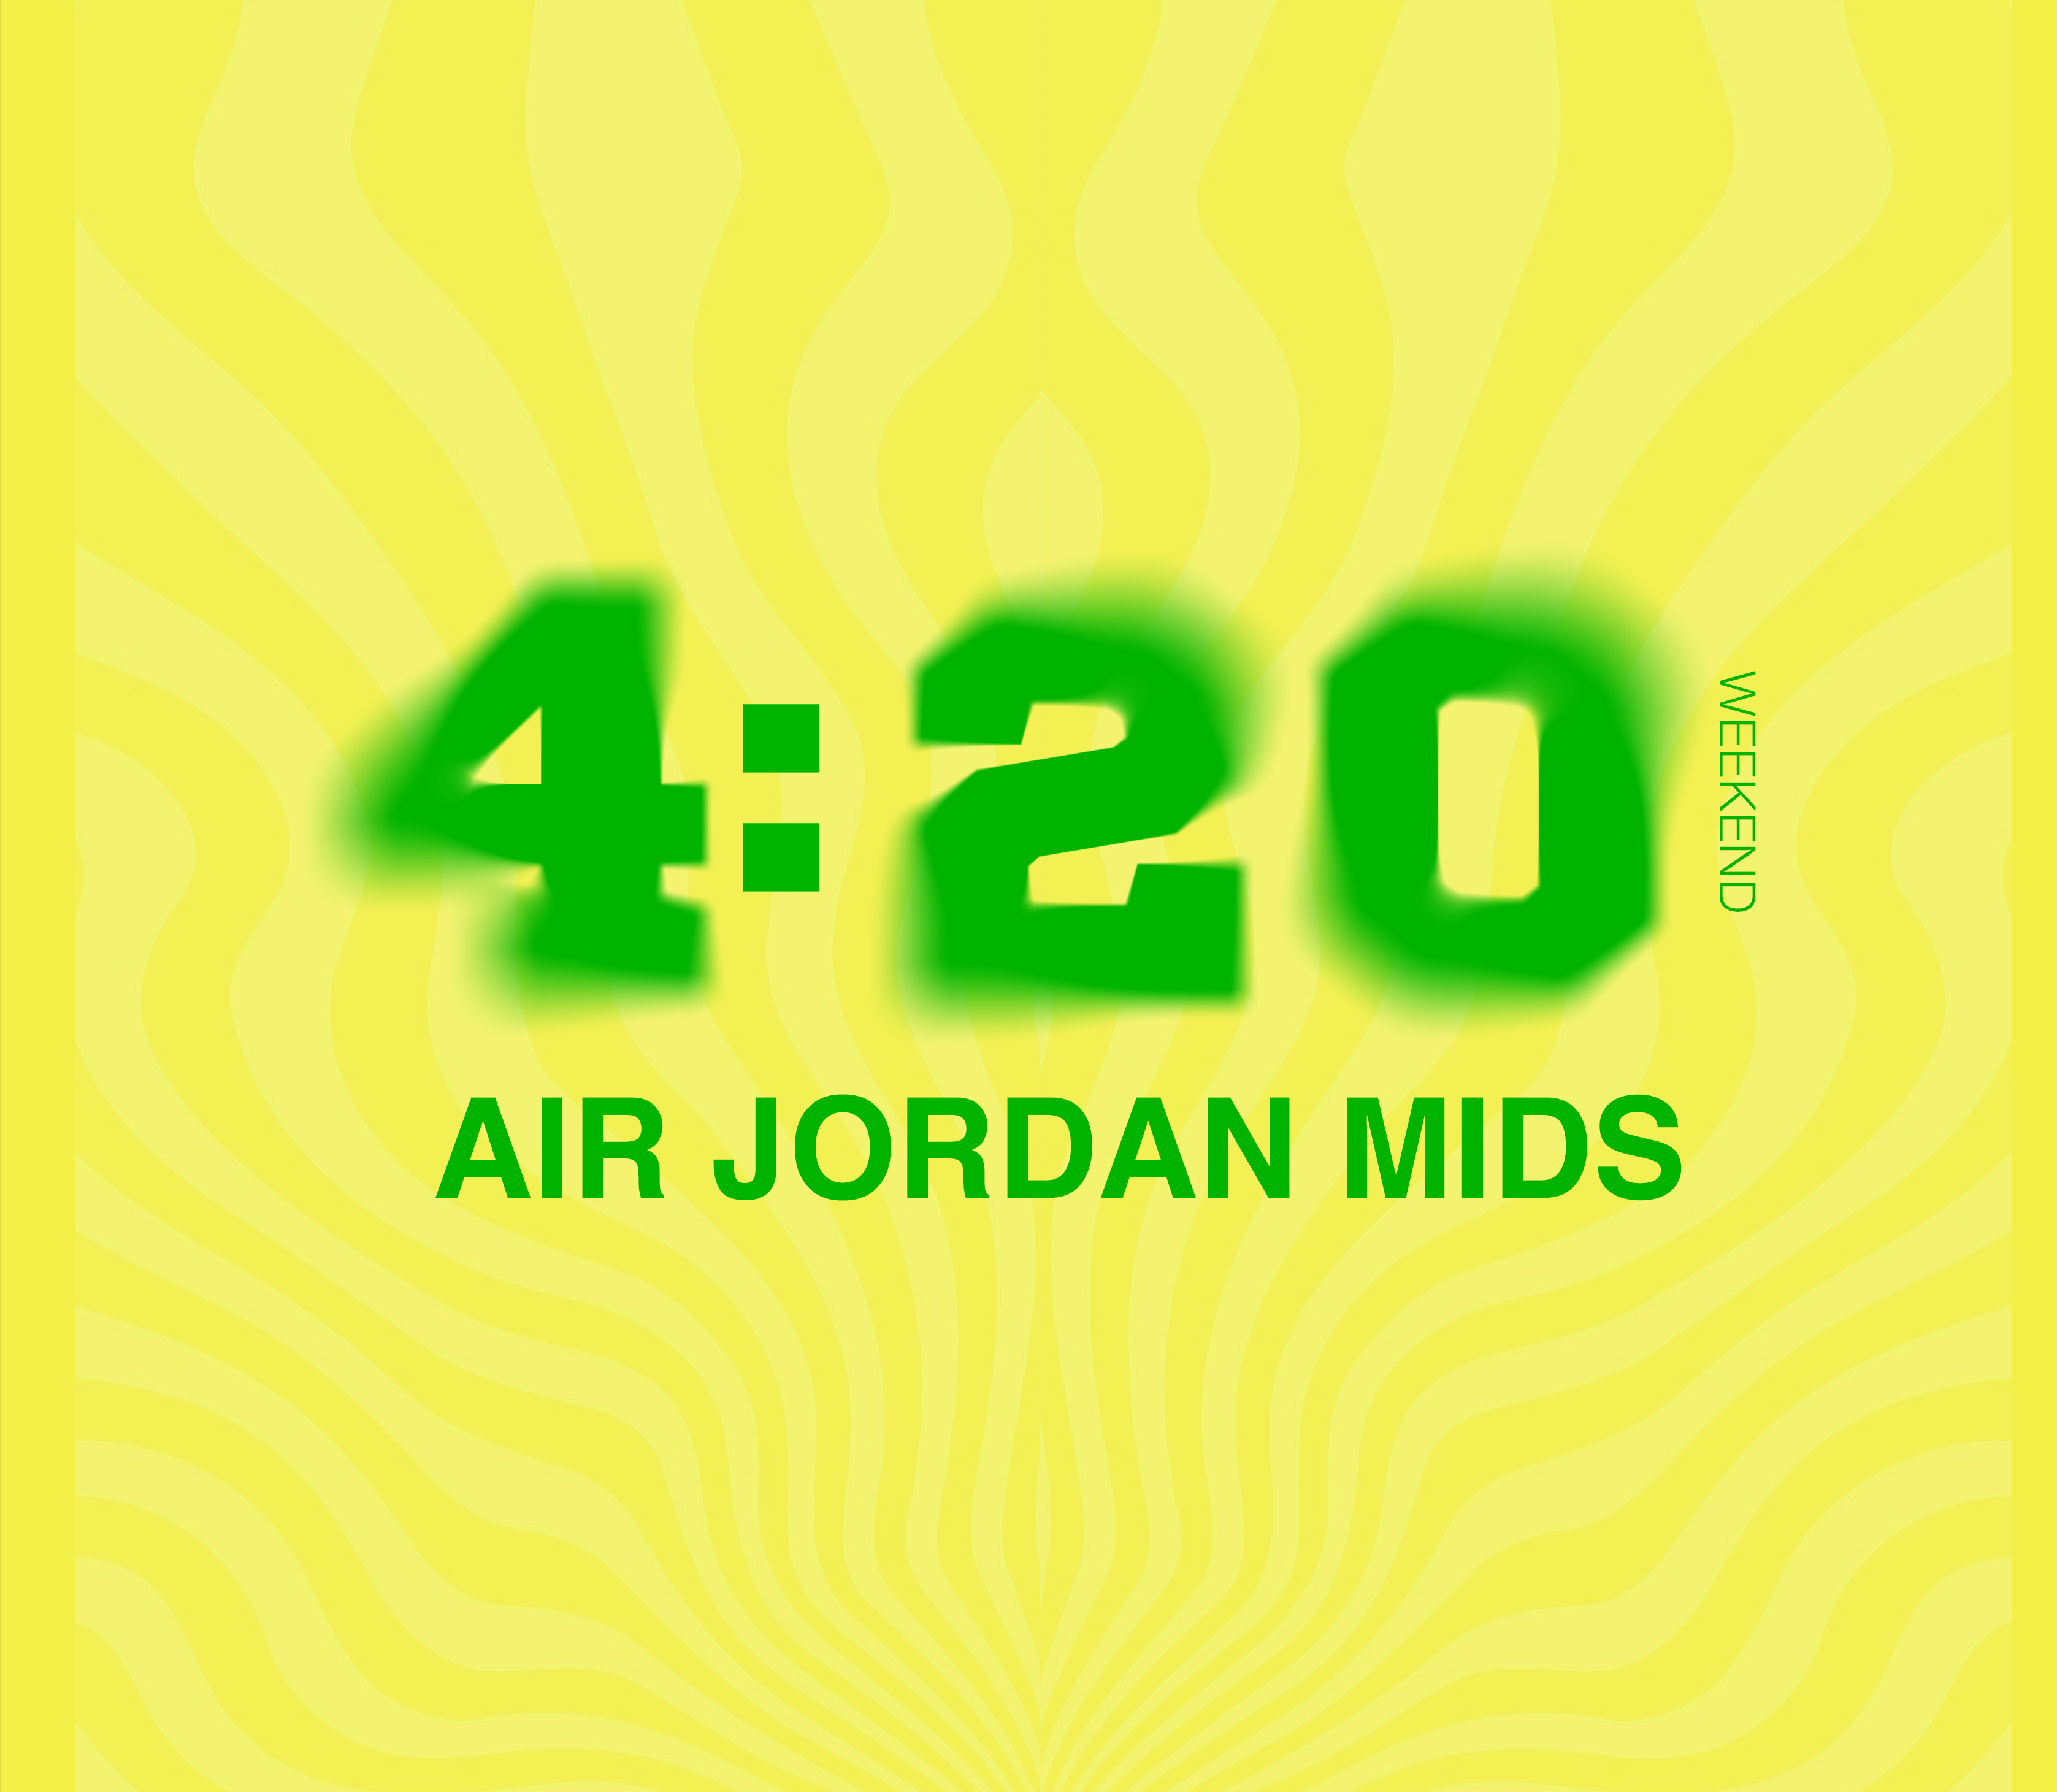 420 AIR JORDAN MIDS